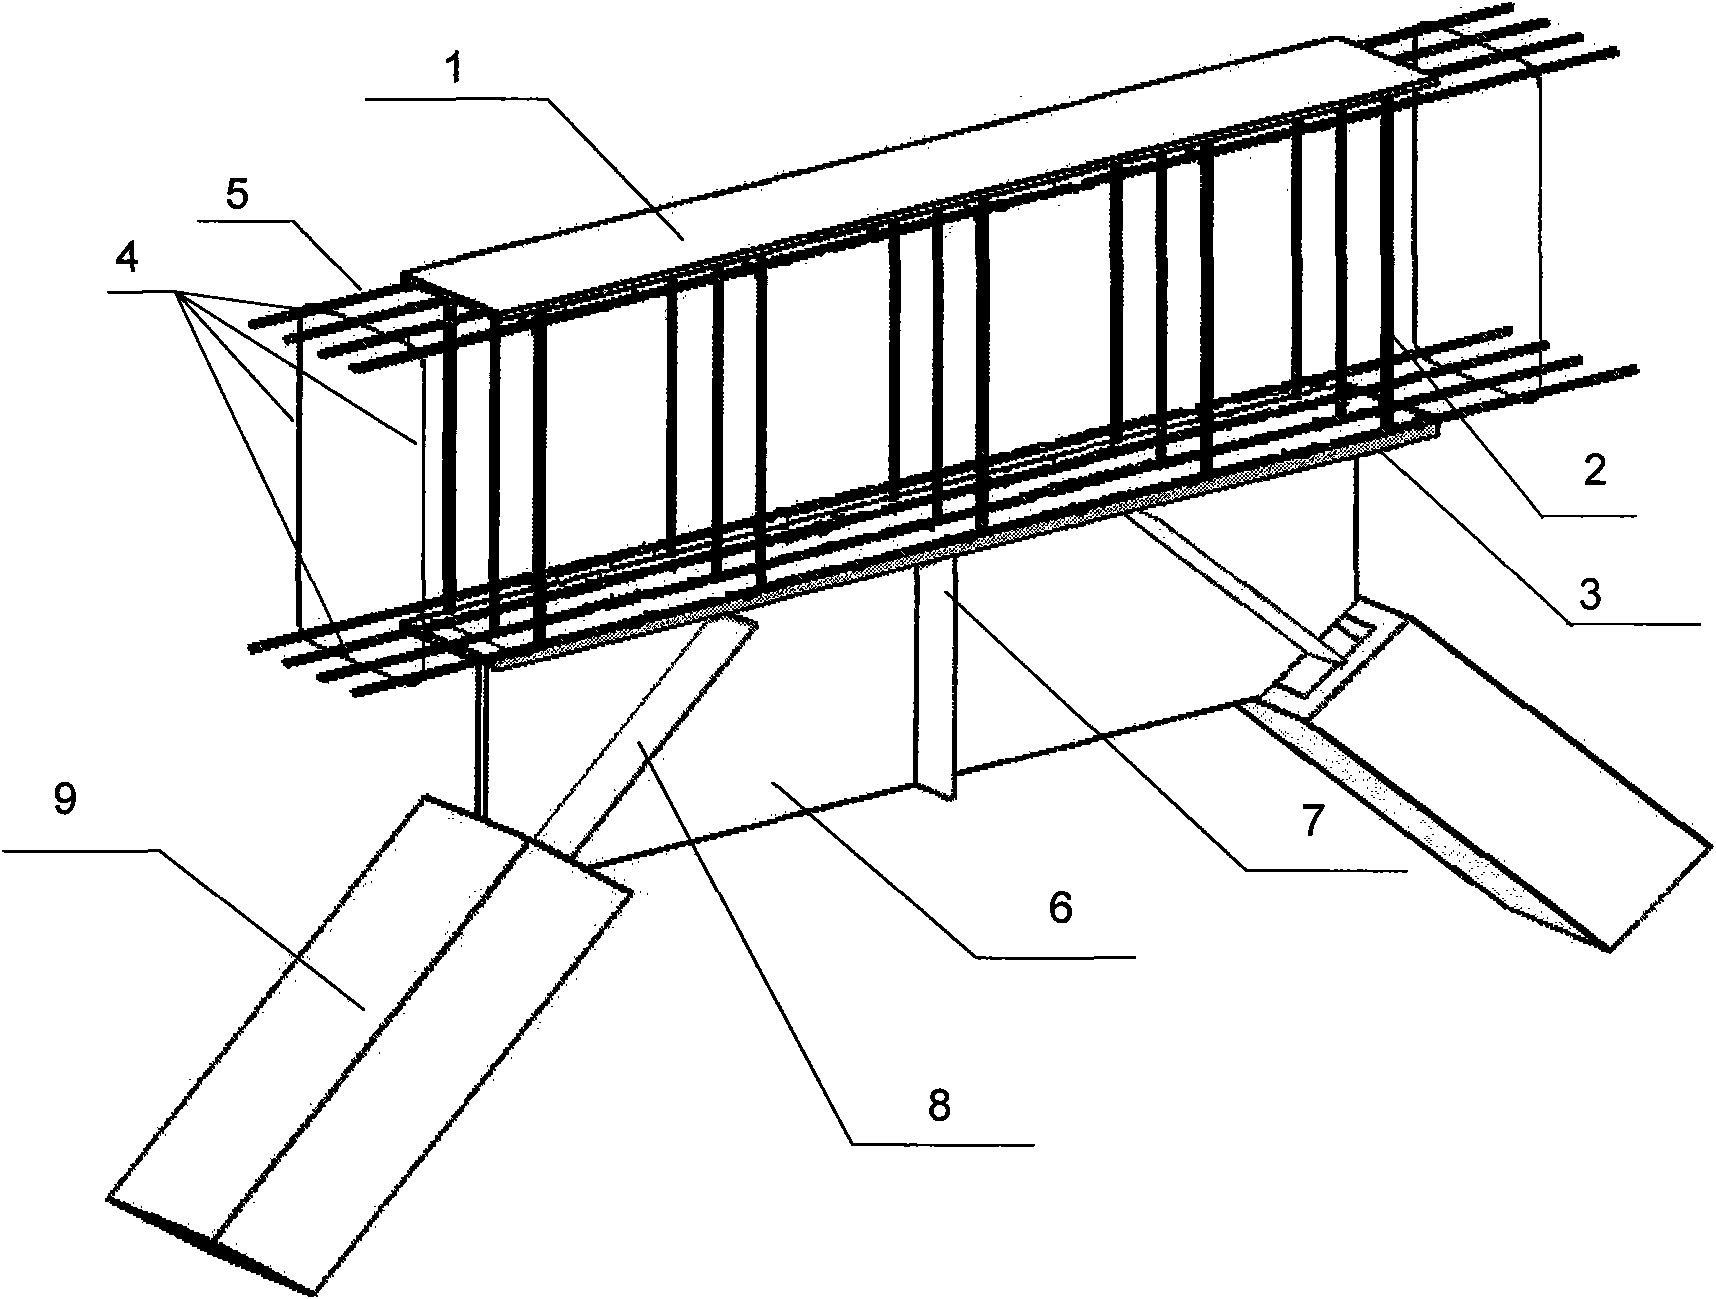 Vertical reinforced concrete component-connection node for buckling-restrained brace